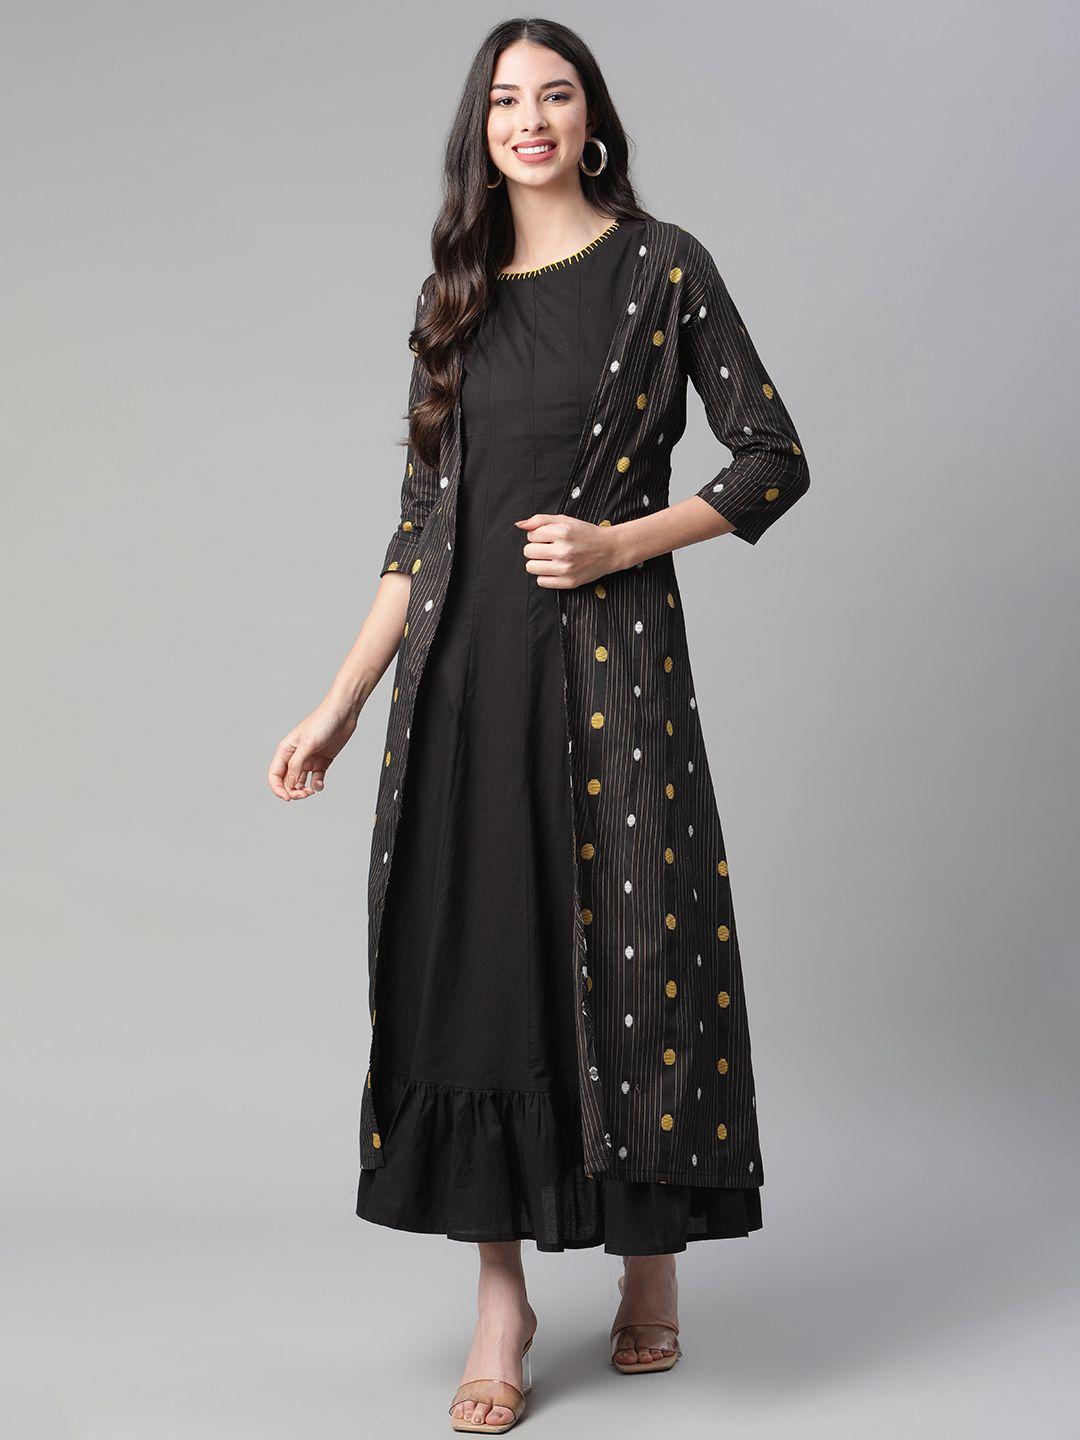 rangriti black layered ethnic style cotton a-line maxi dress